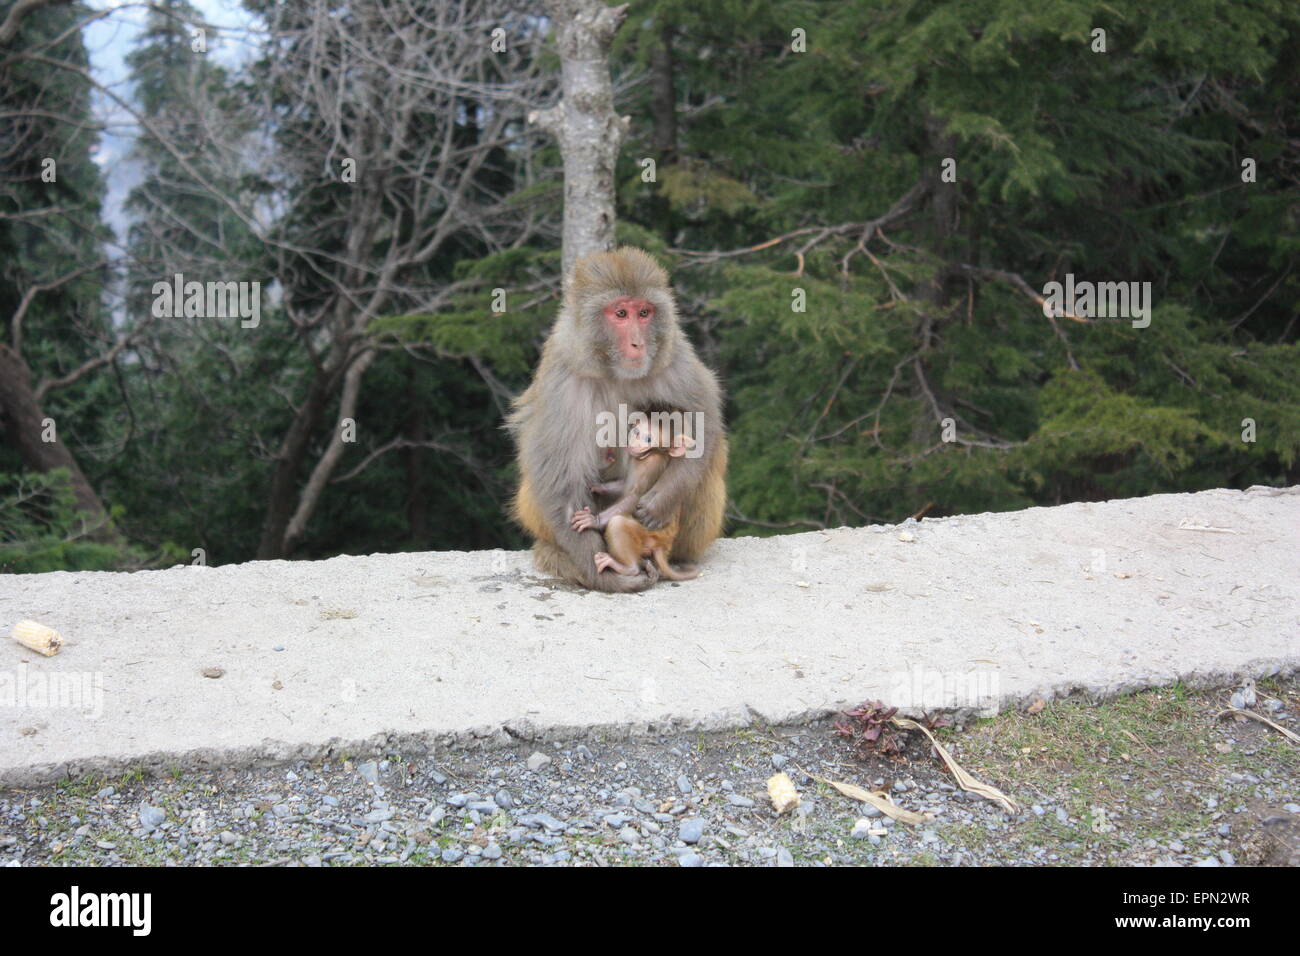 Mother Monkey feeding a child Stock Photo